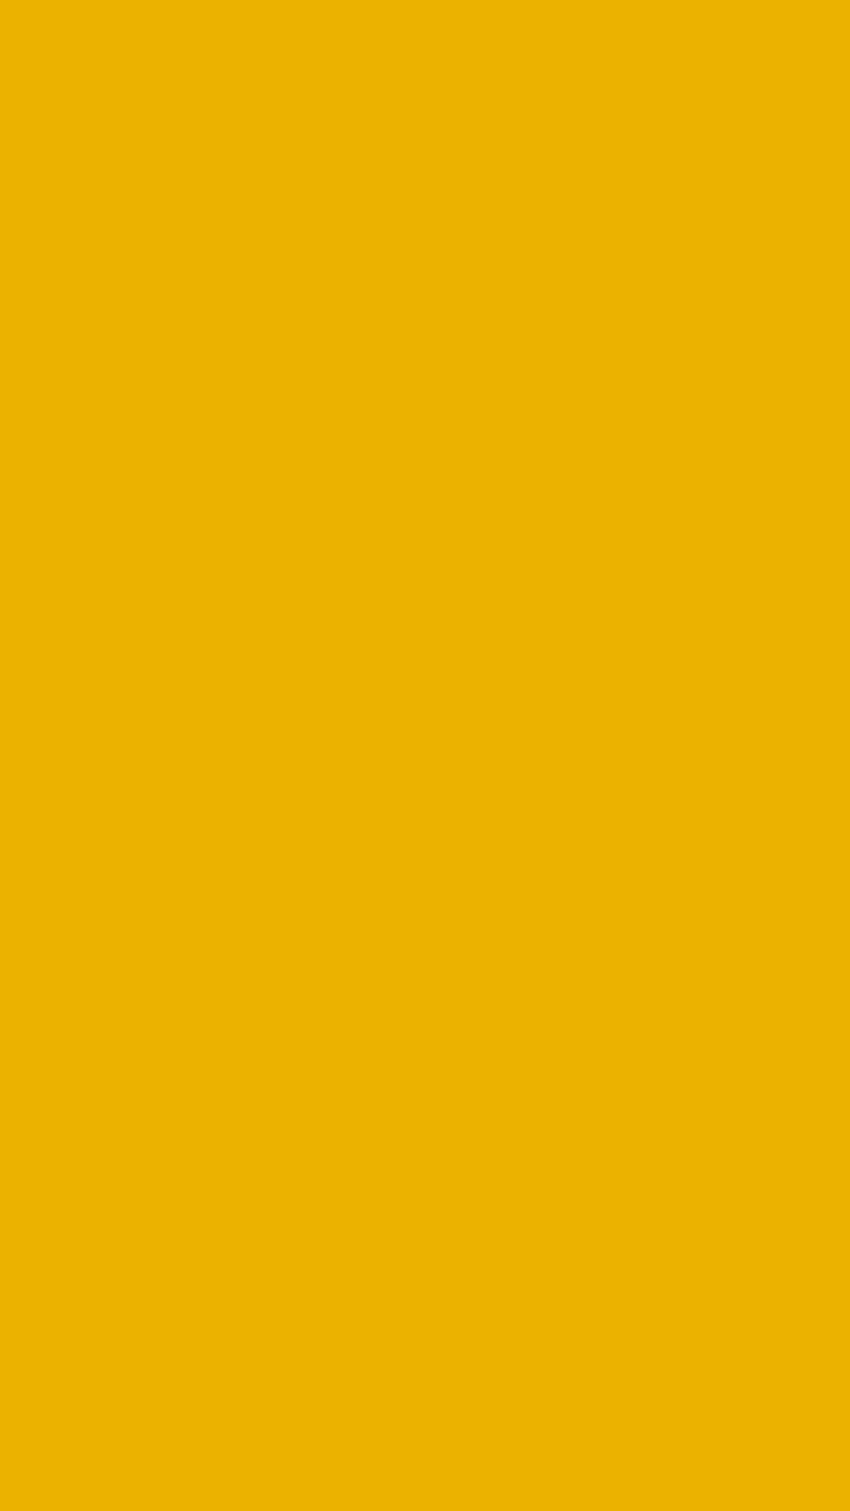 Kuning Solid, Warna Oranye wallpaper ponsel HD